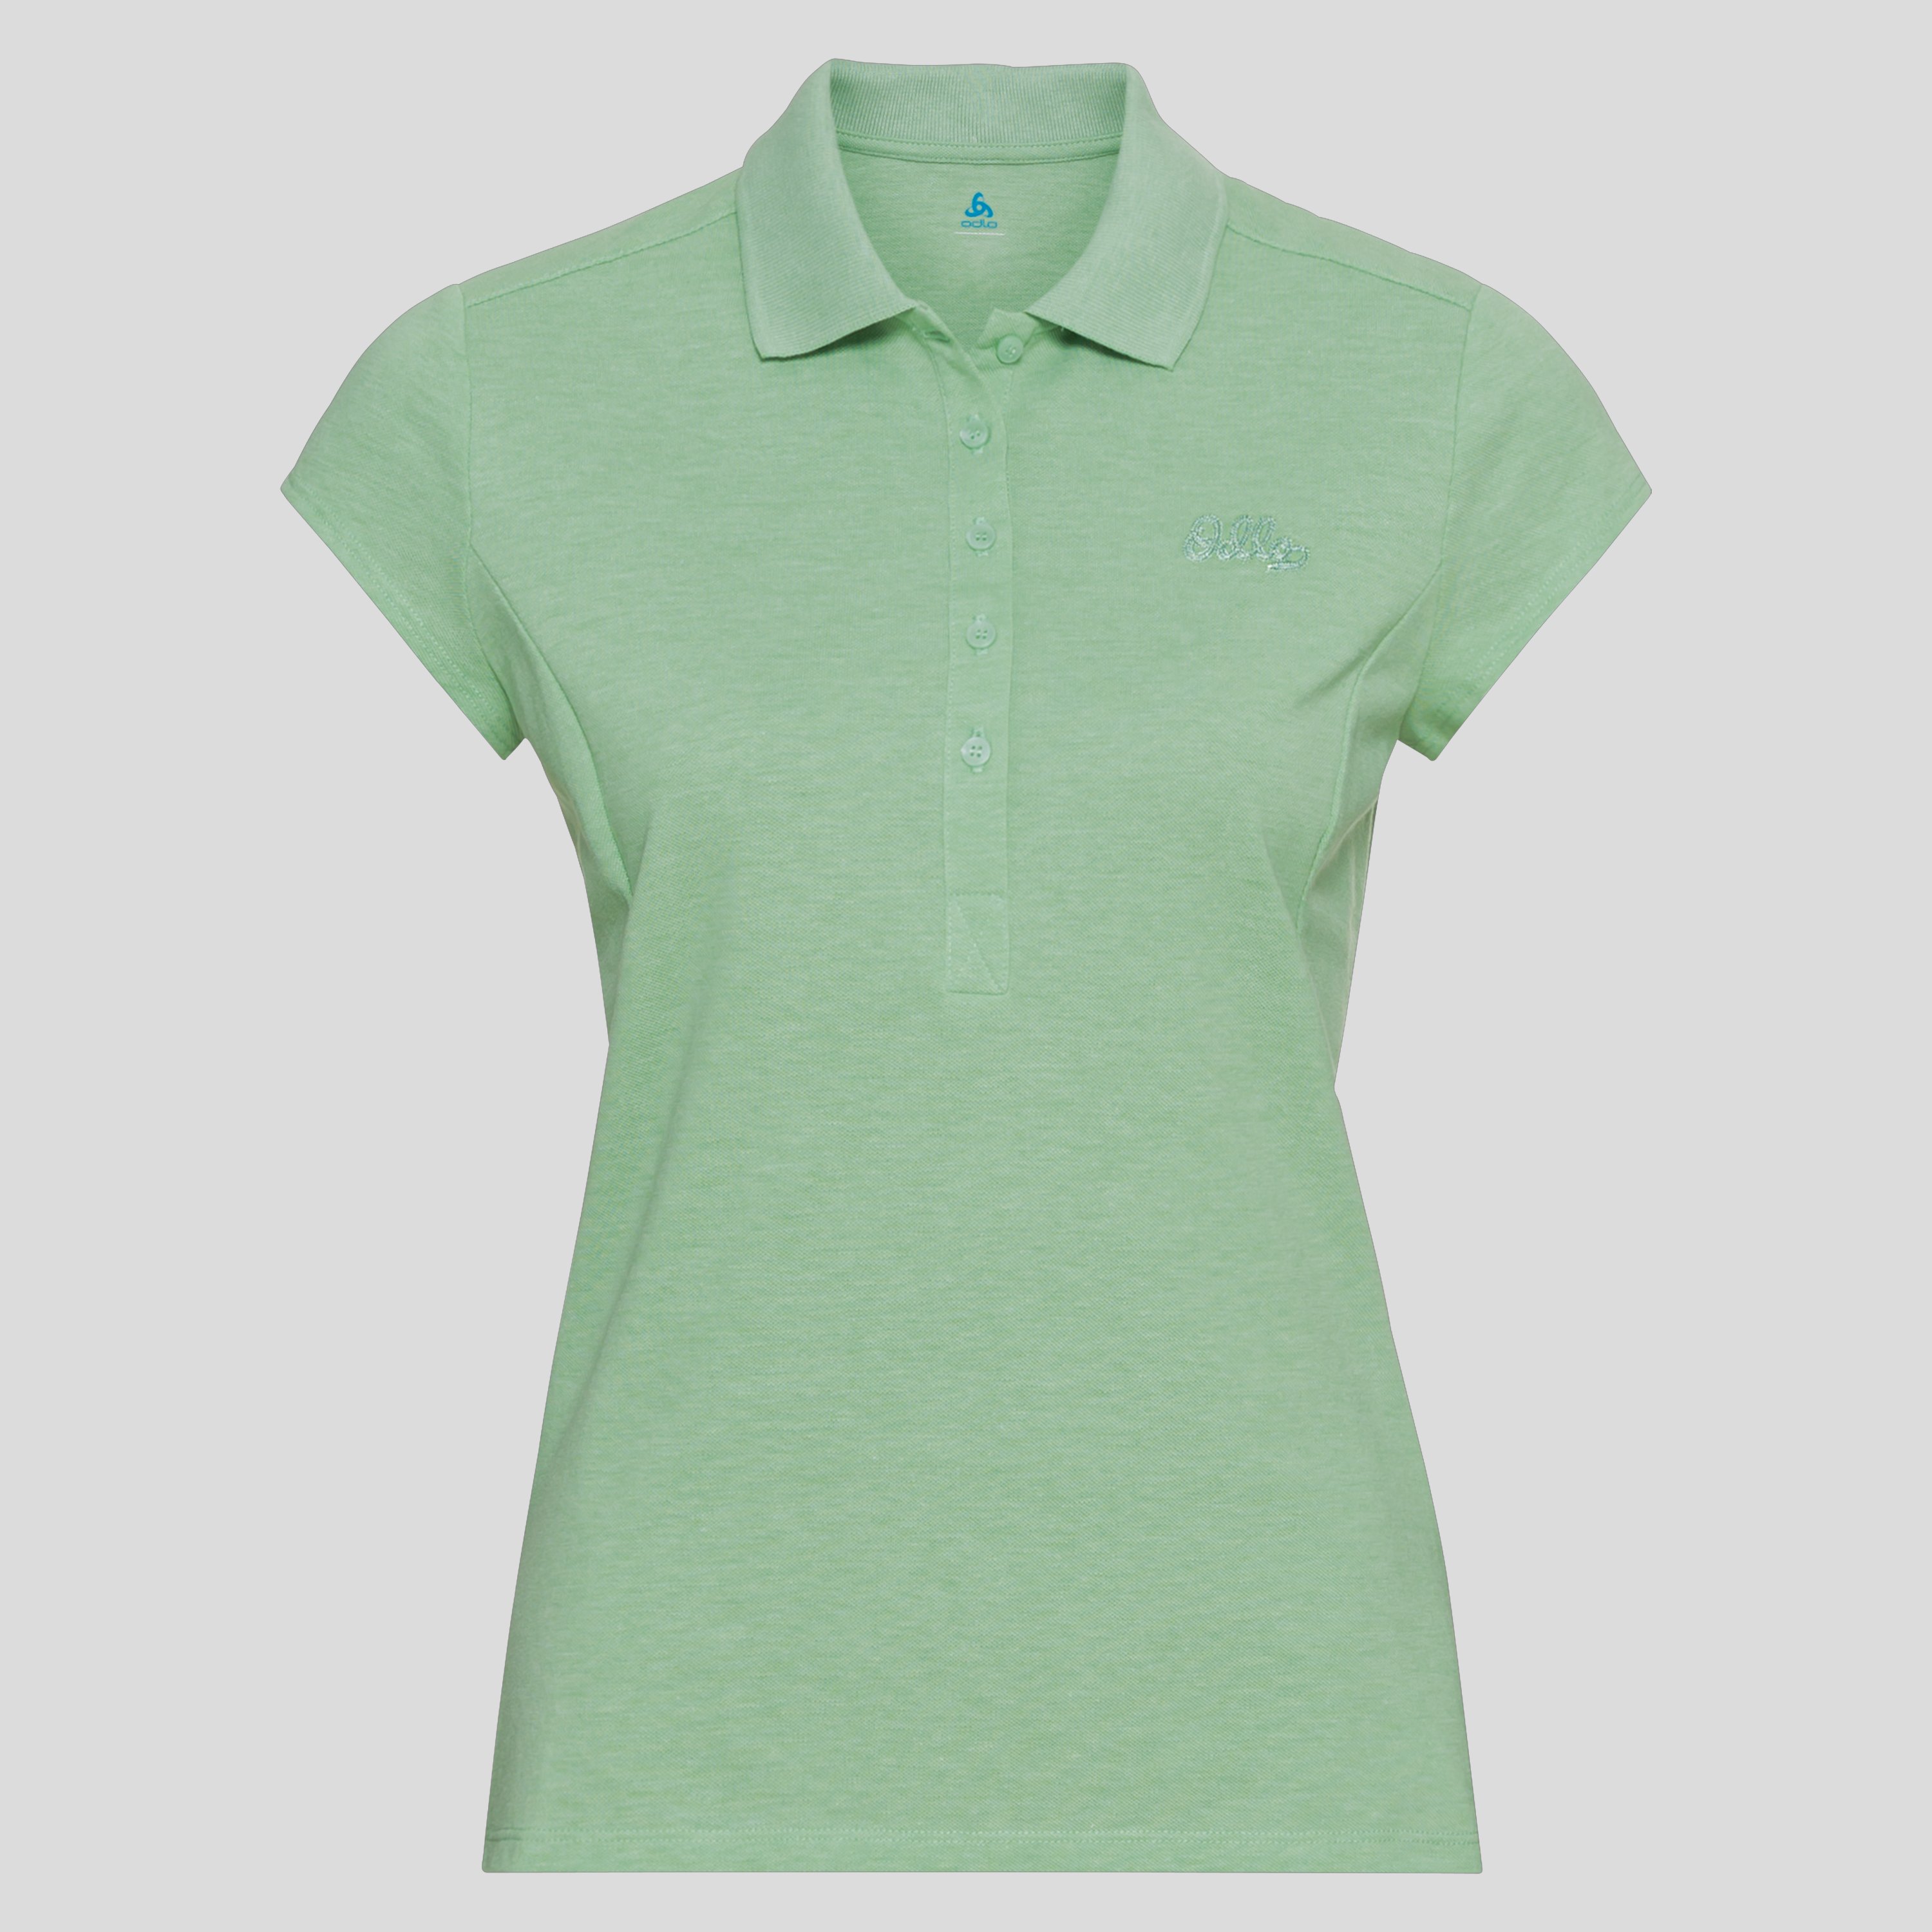 ODLO Kumano Poloshirt für Damen, S, grün